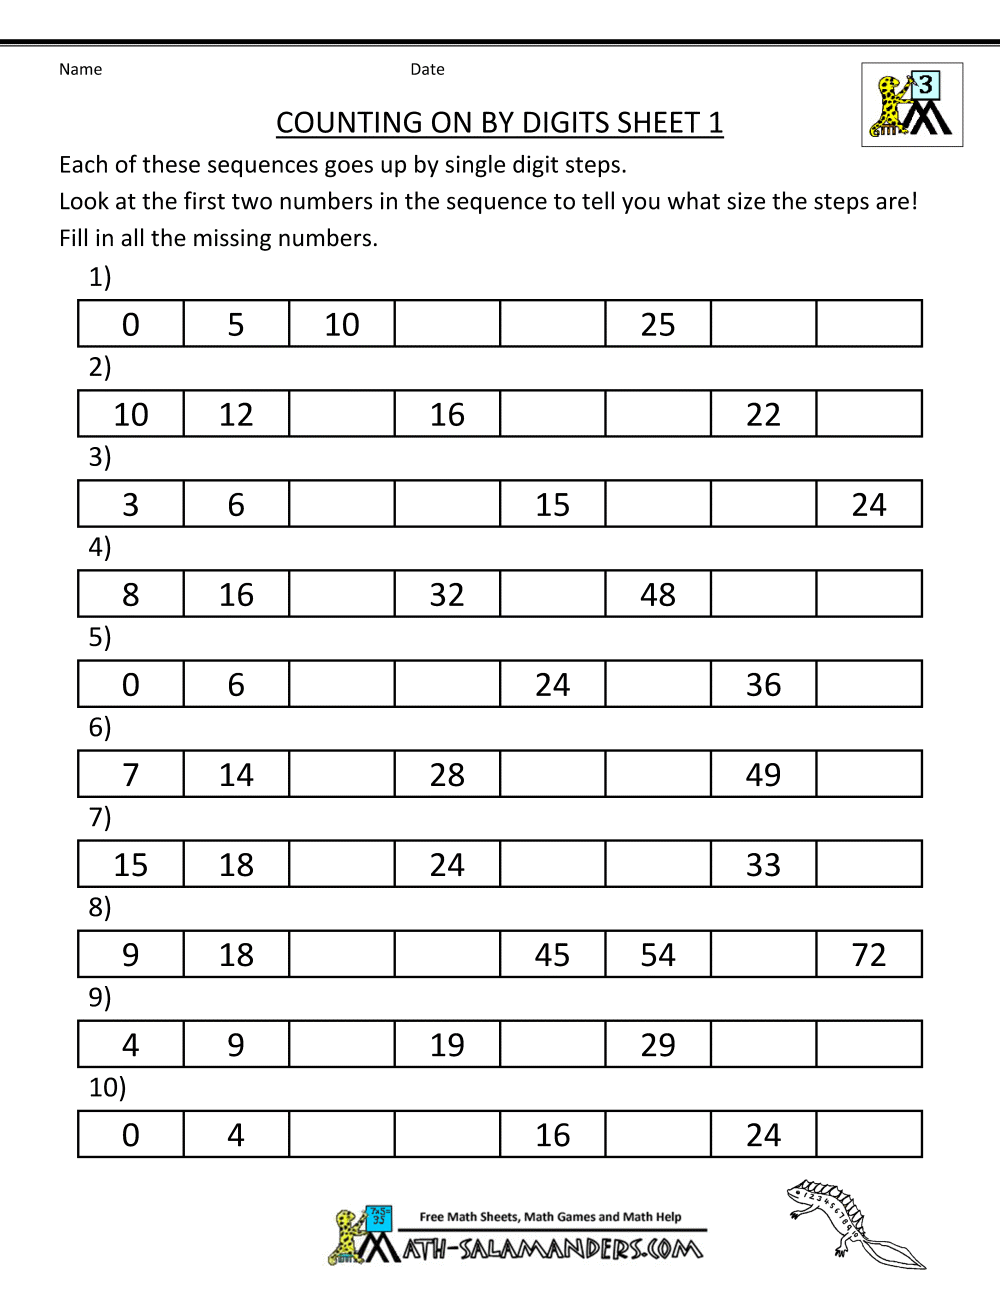 image of math homework